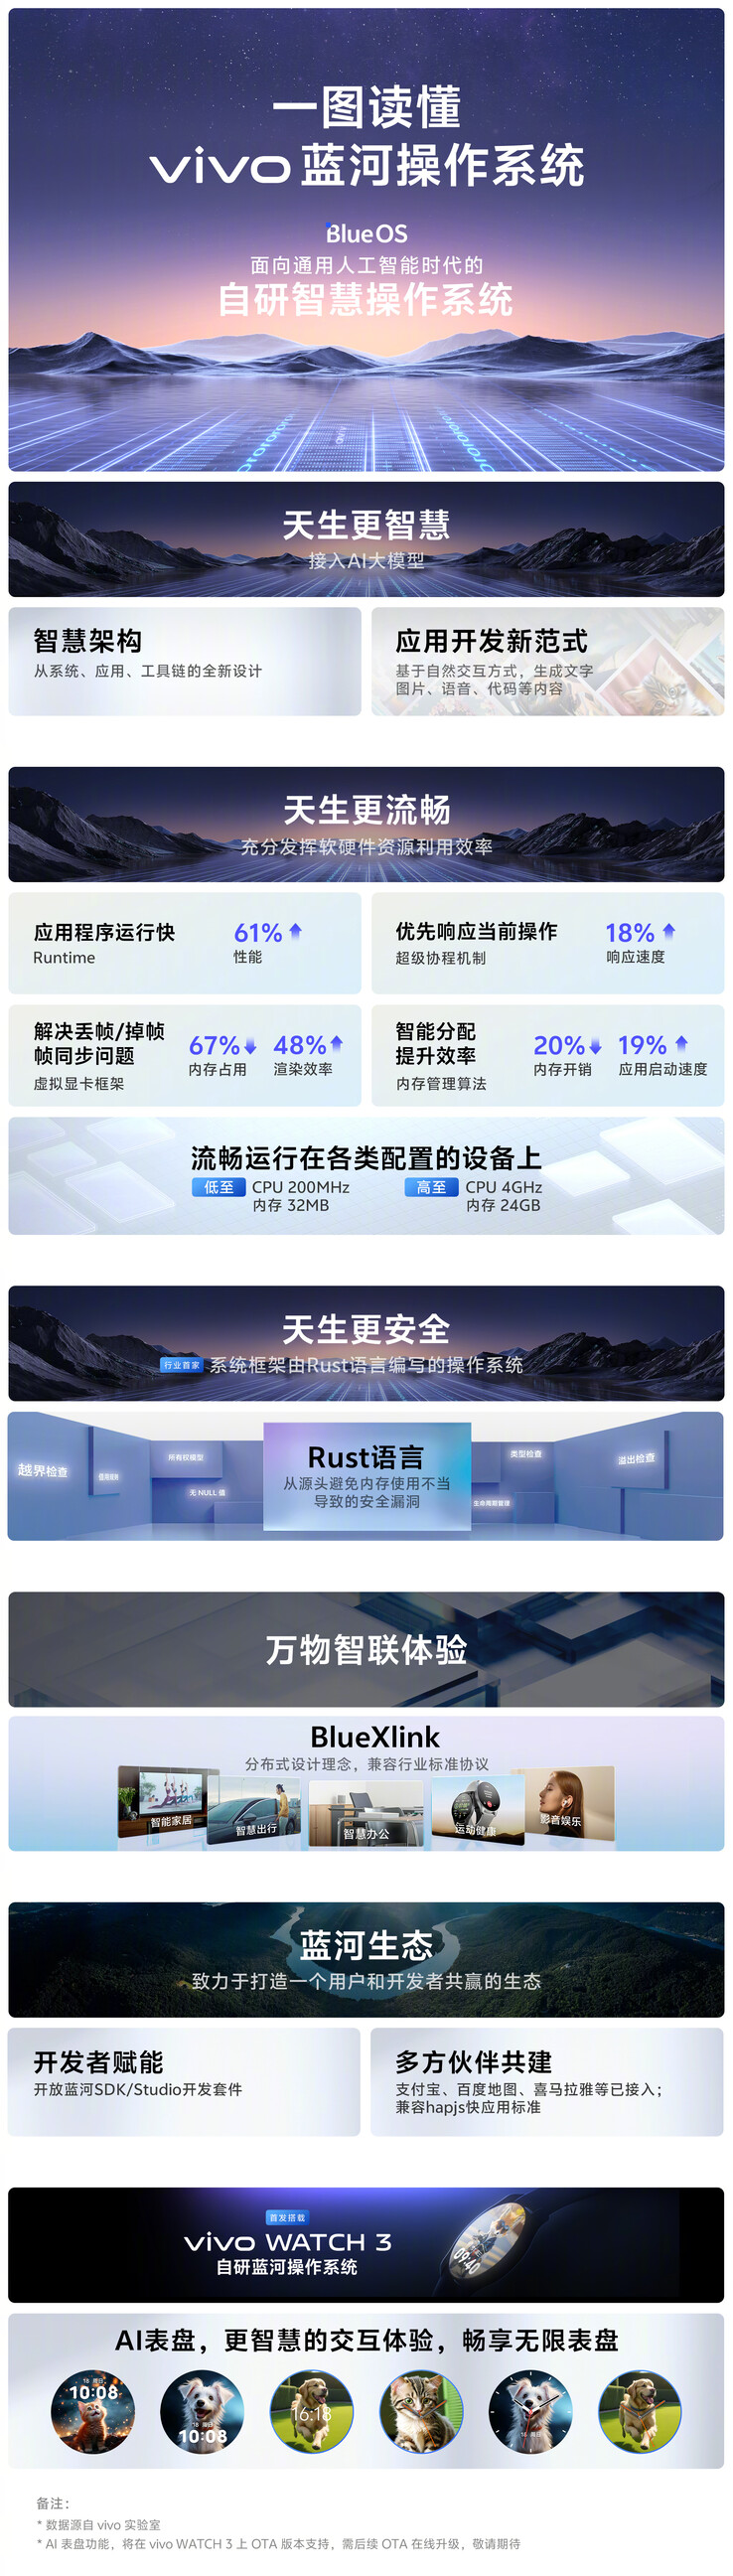 Vivo hypes its new BlueOS. (Source: Vivo via Weibo)